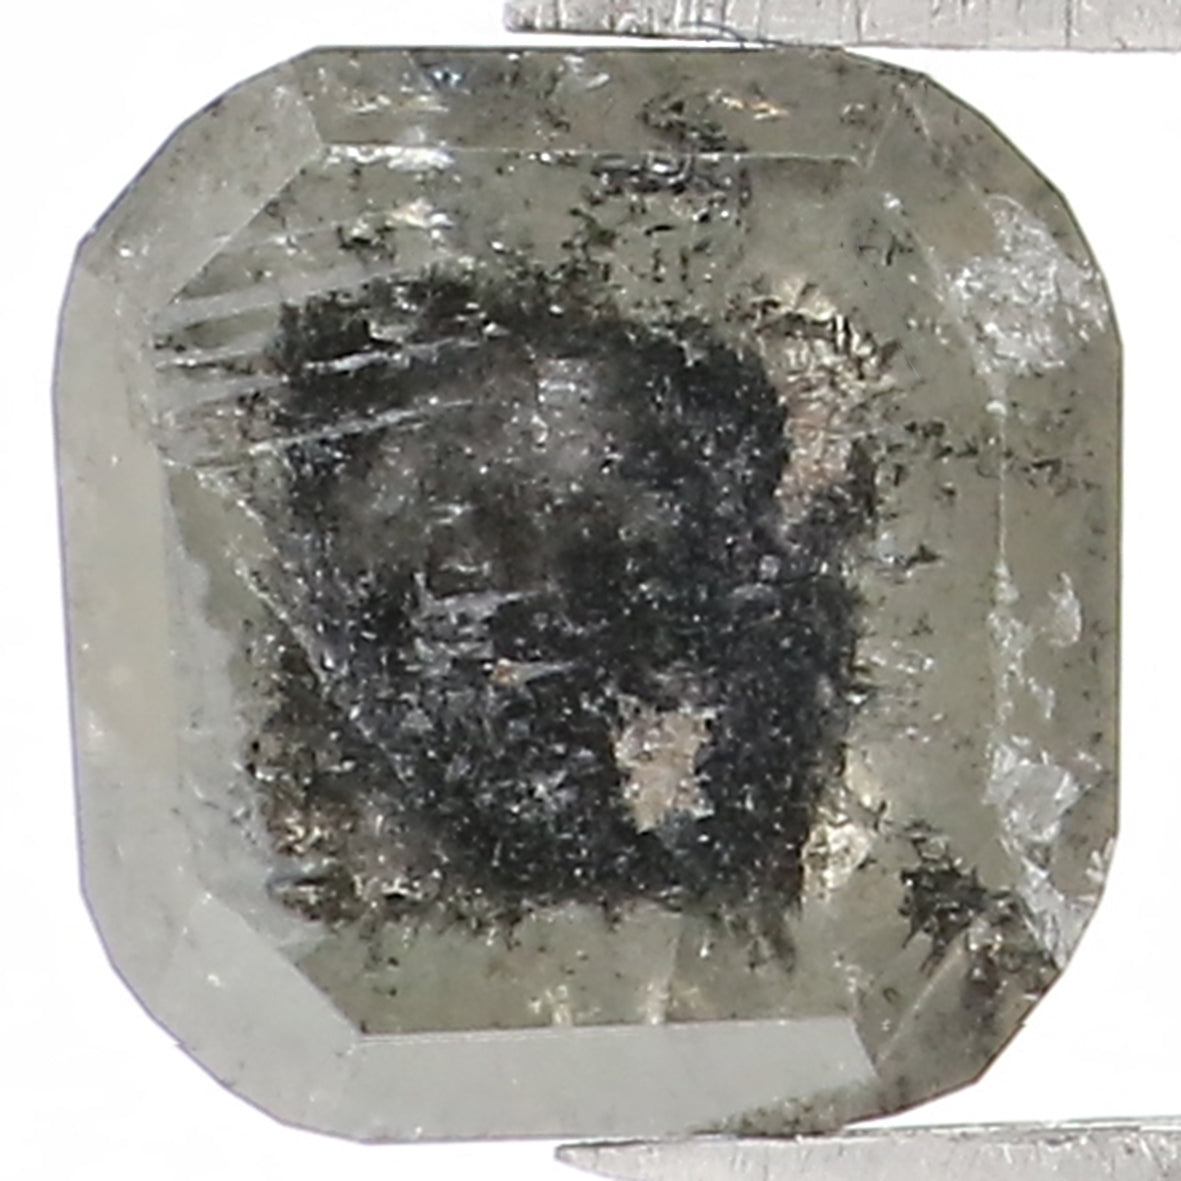 Natural Loose Cushion Salt And Pepper Diamond Black Grey Color 0.89 CT 5.20 MM Cushion Shape Rose Cut Diamond L1341